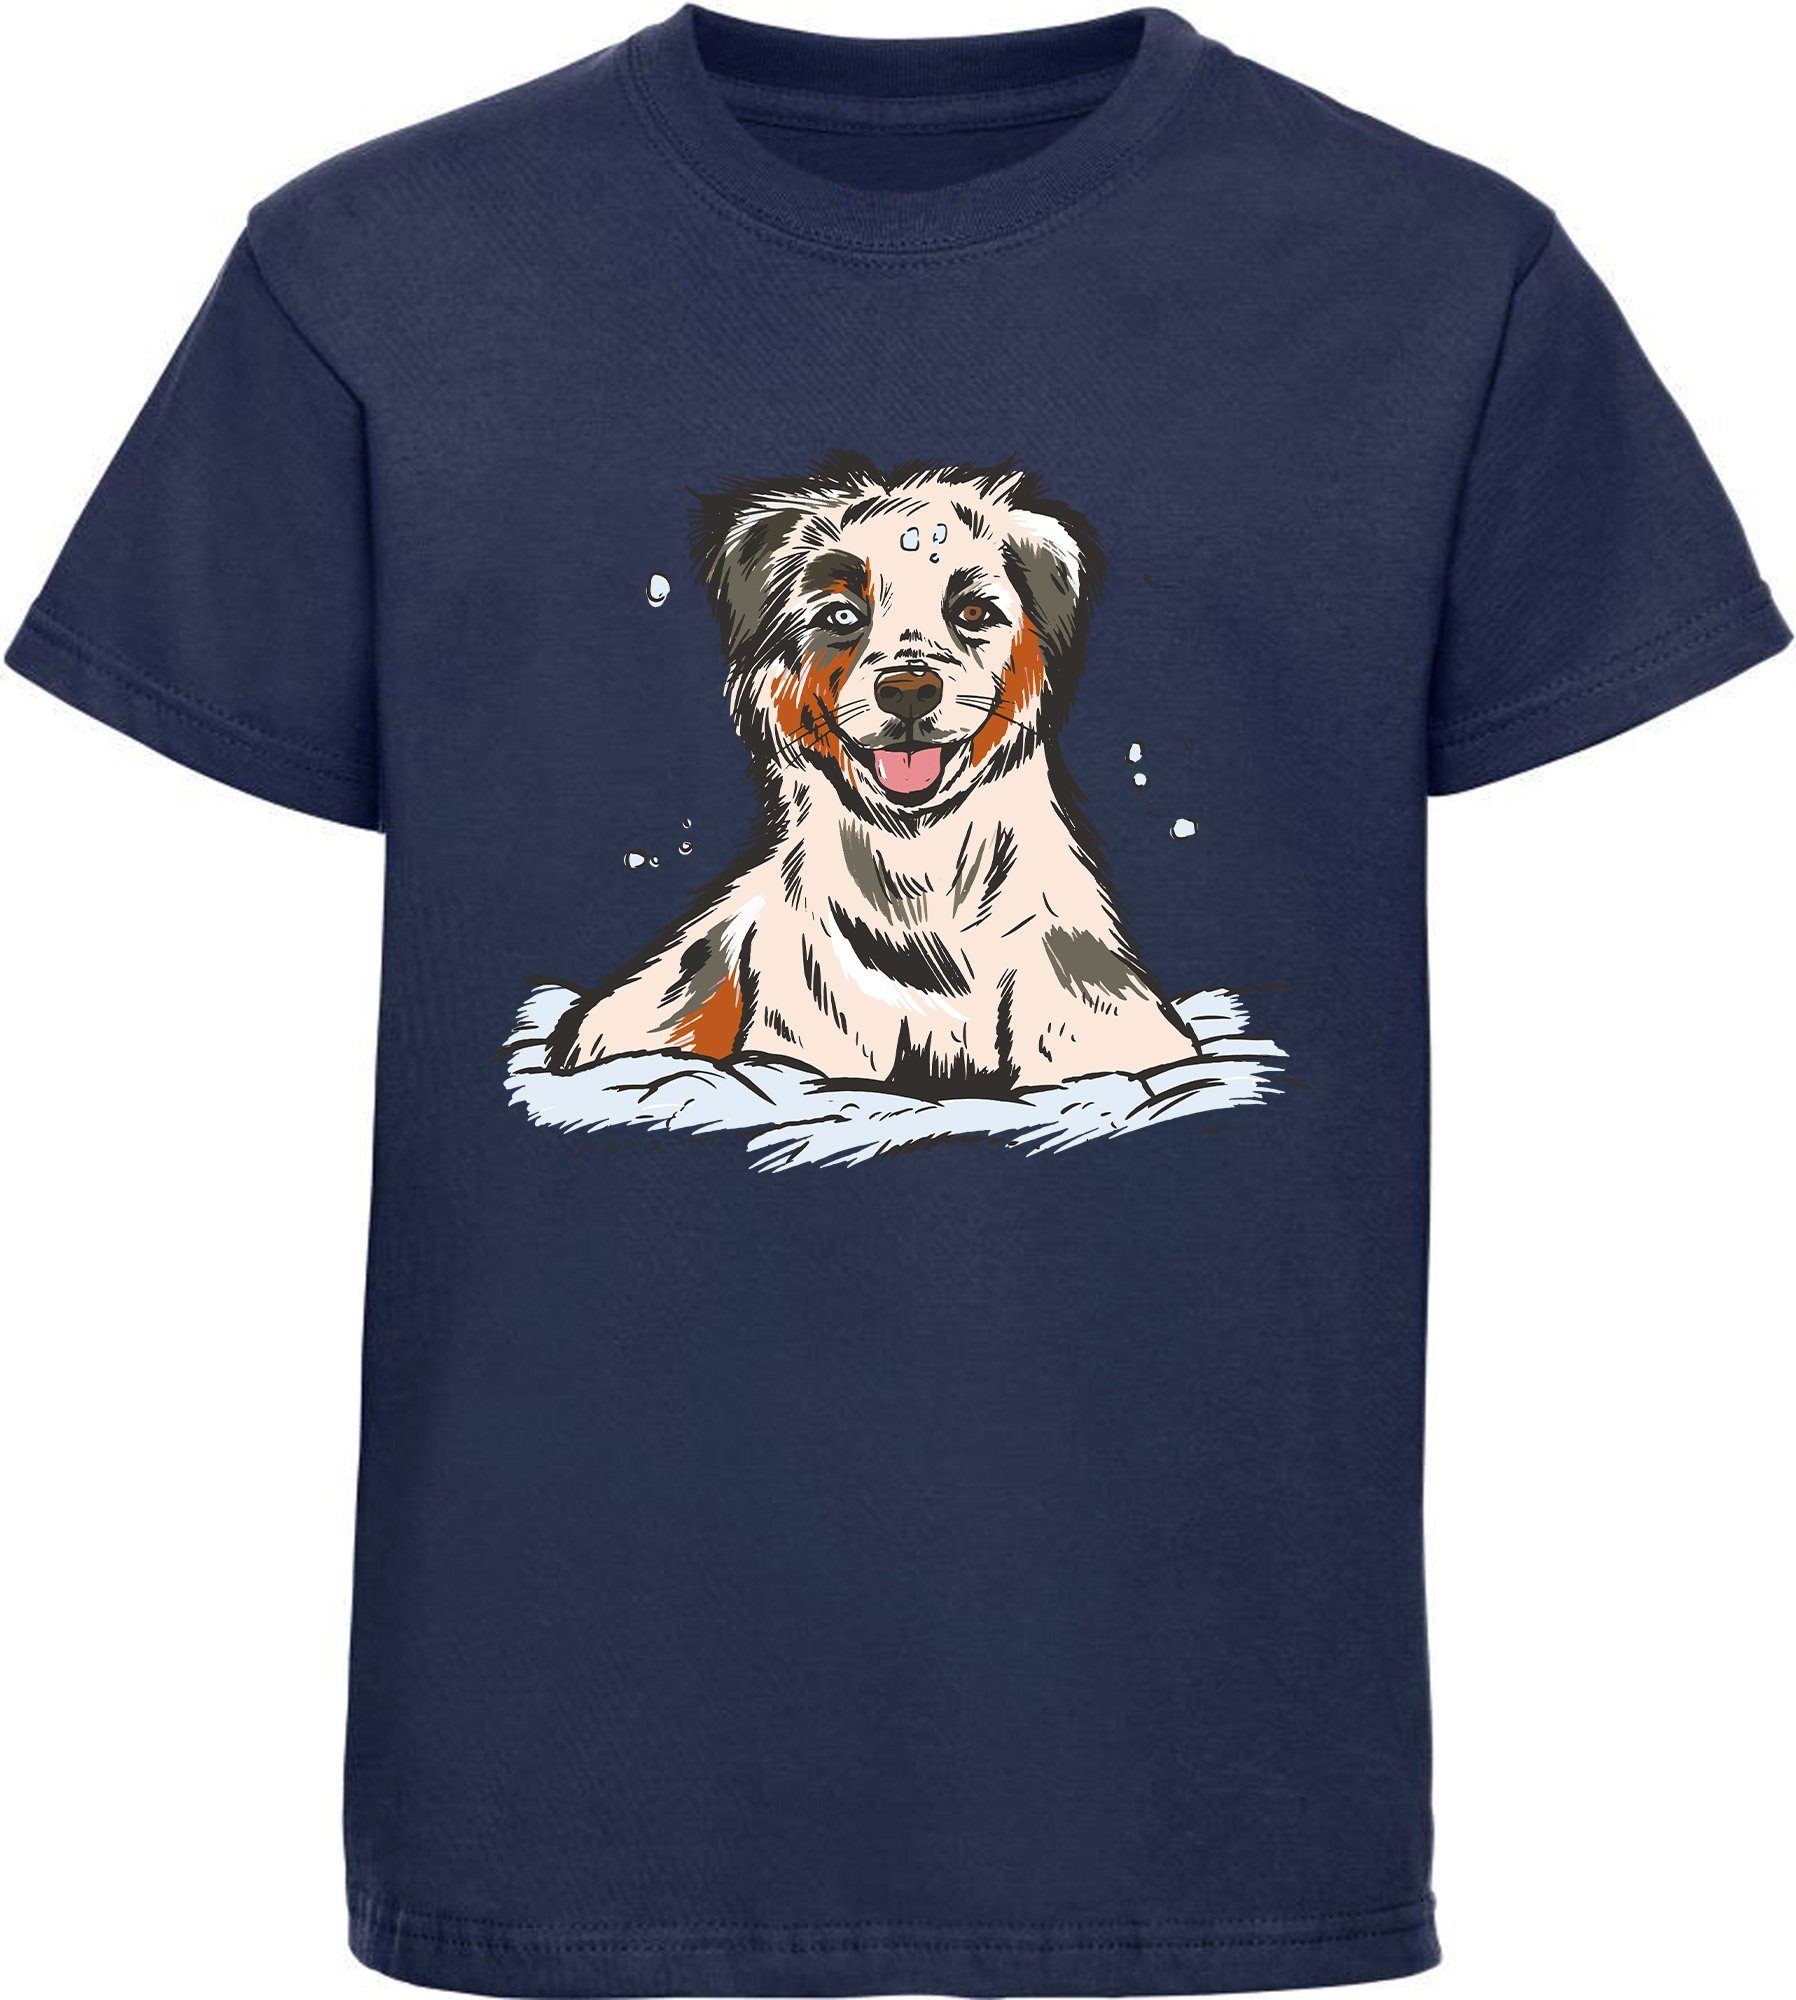 Kinder Print-Shirt Australian mit T-Shirt navy Aufdruck, i216 bedrucktes blau Jugend Welpe MyDesign24 Shepherd Hunde und Baumwollshirt